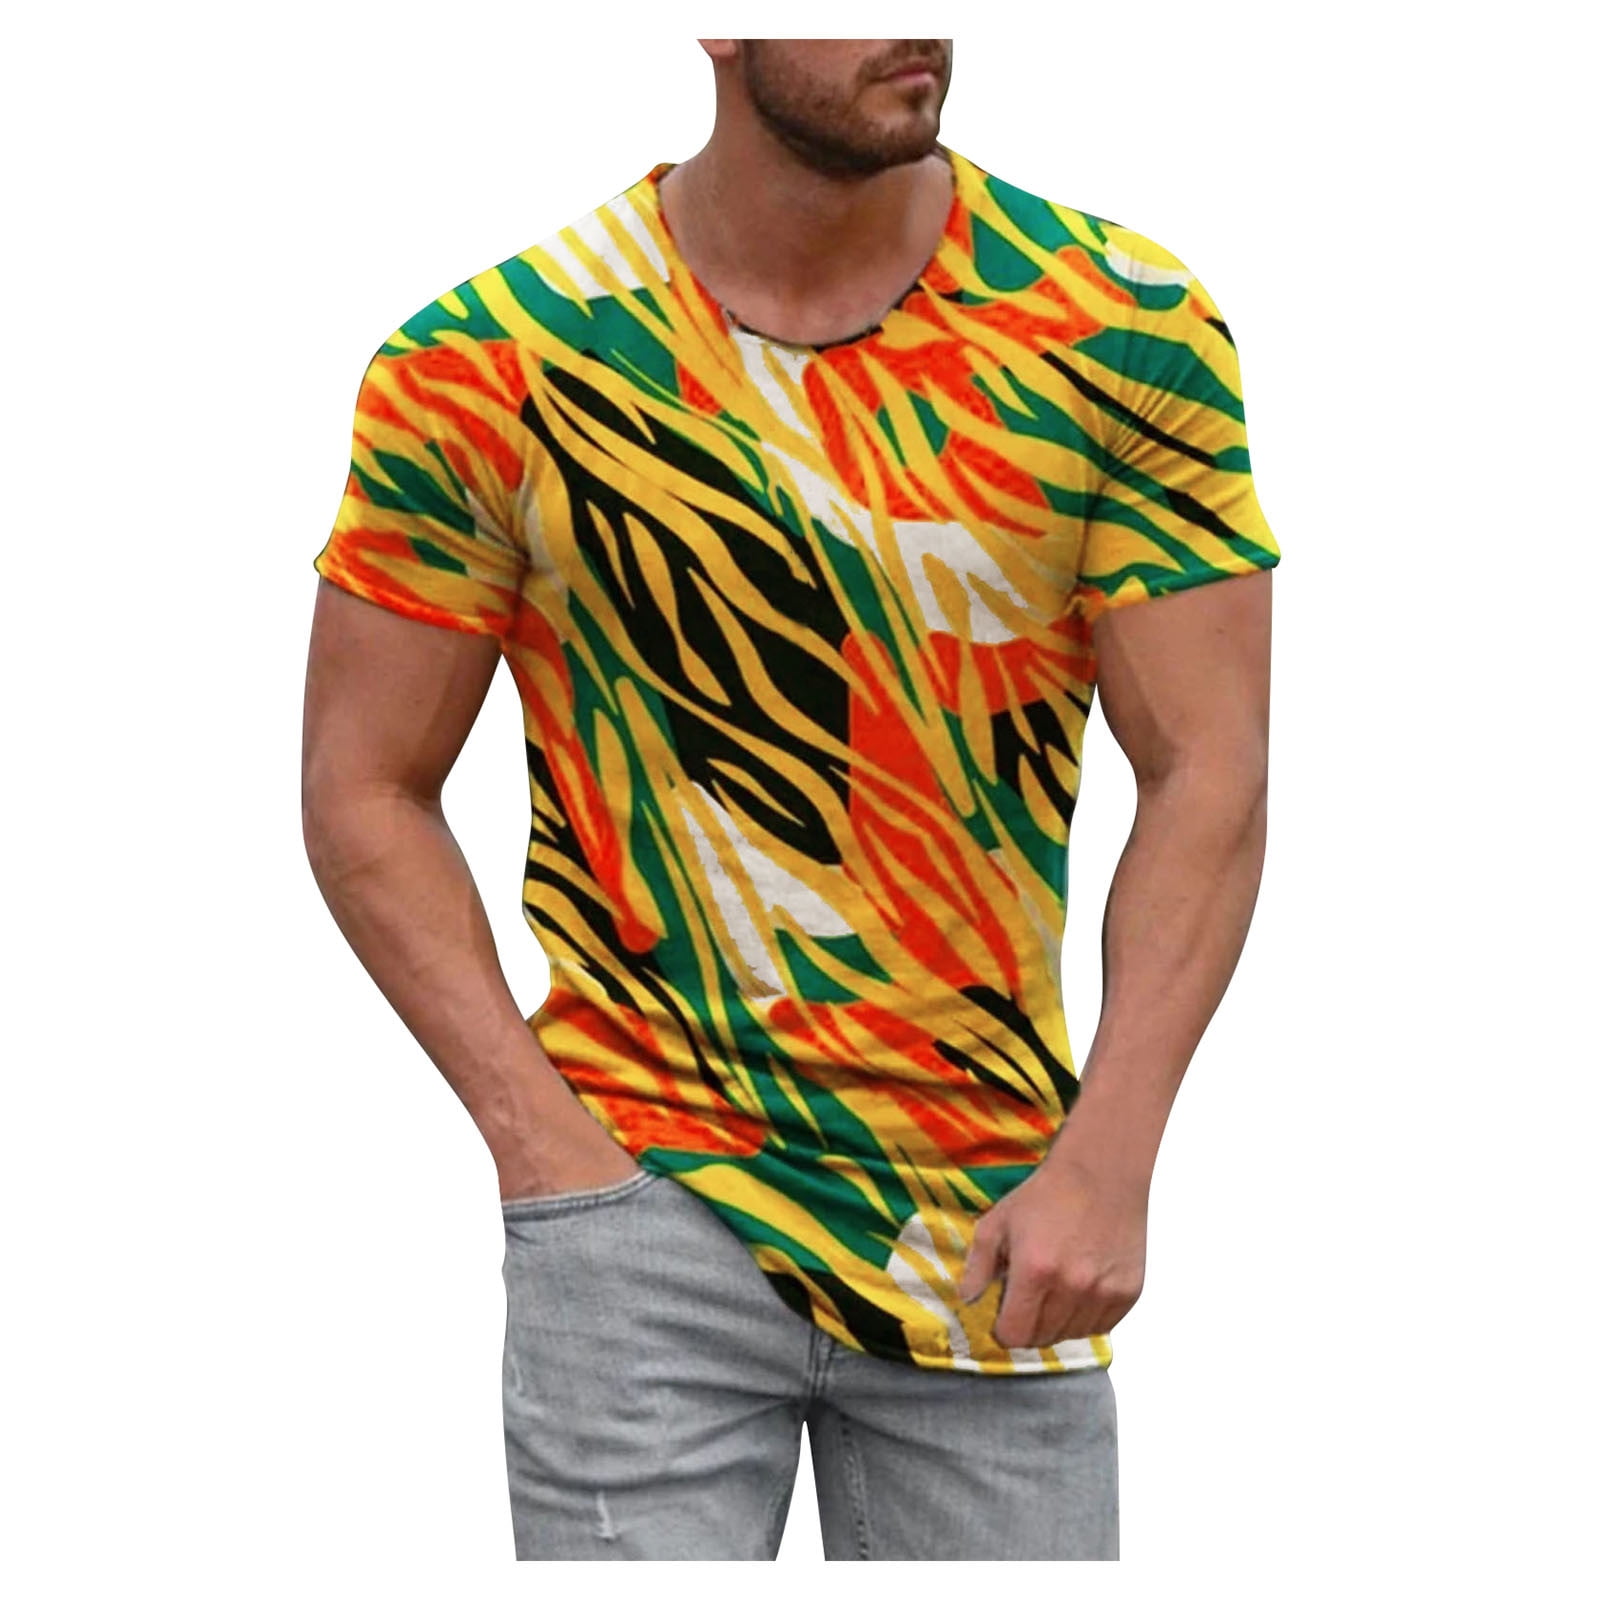 KIJBLAE Sales Men's T-Shirt Casual Tops 3D Vintage Ethnic Graphic